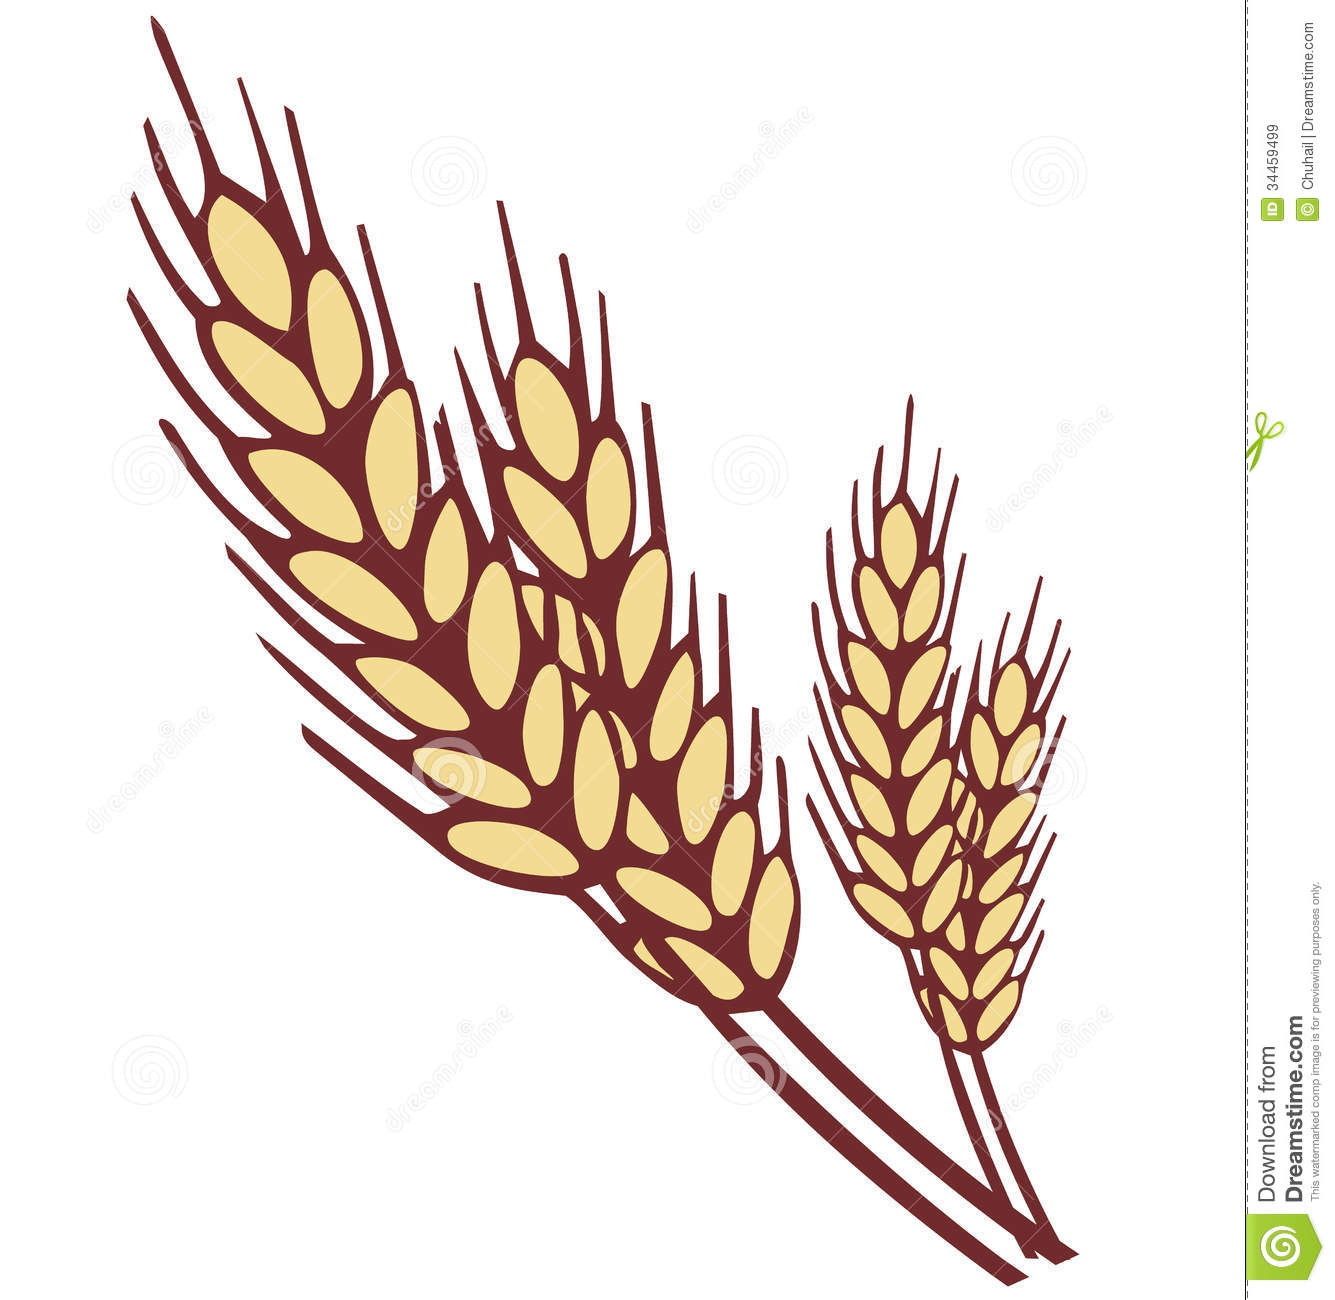 Clipart wheat stalk - Clipart